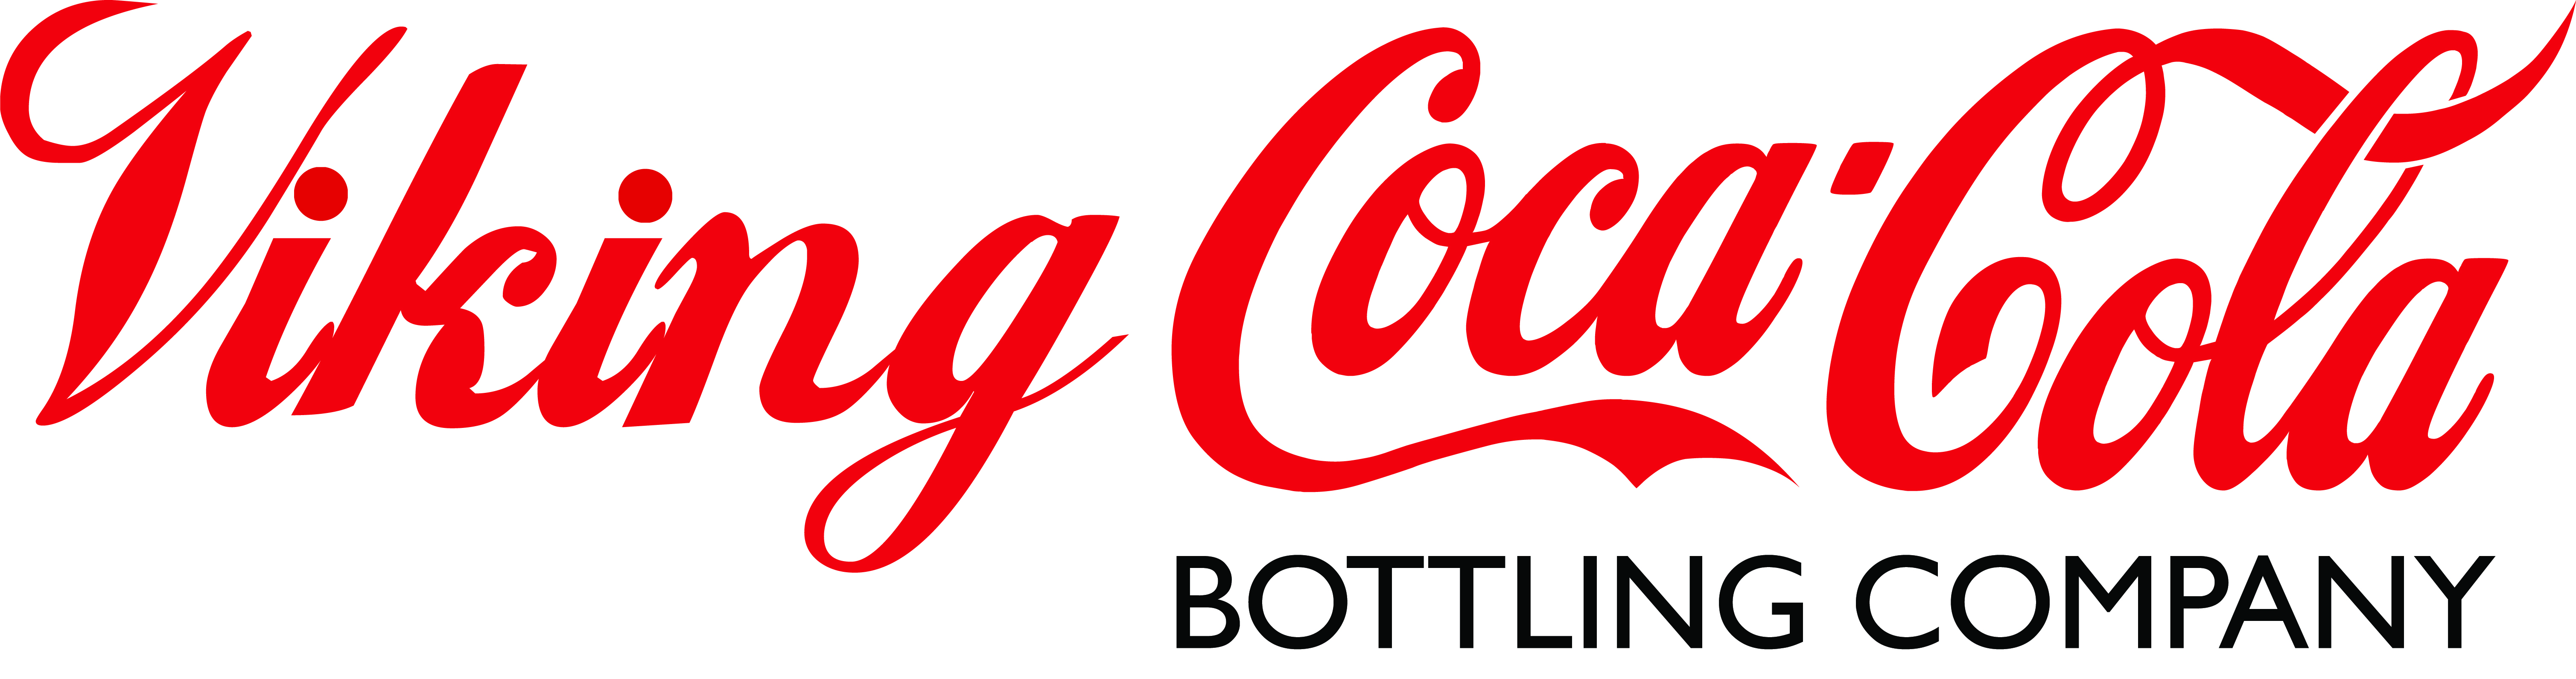 Viking Coco-Cola